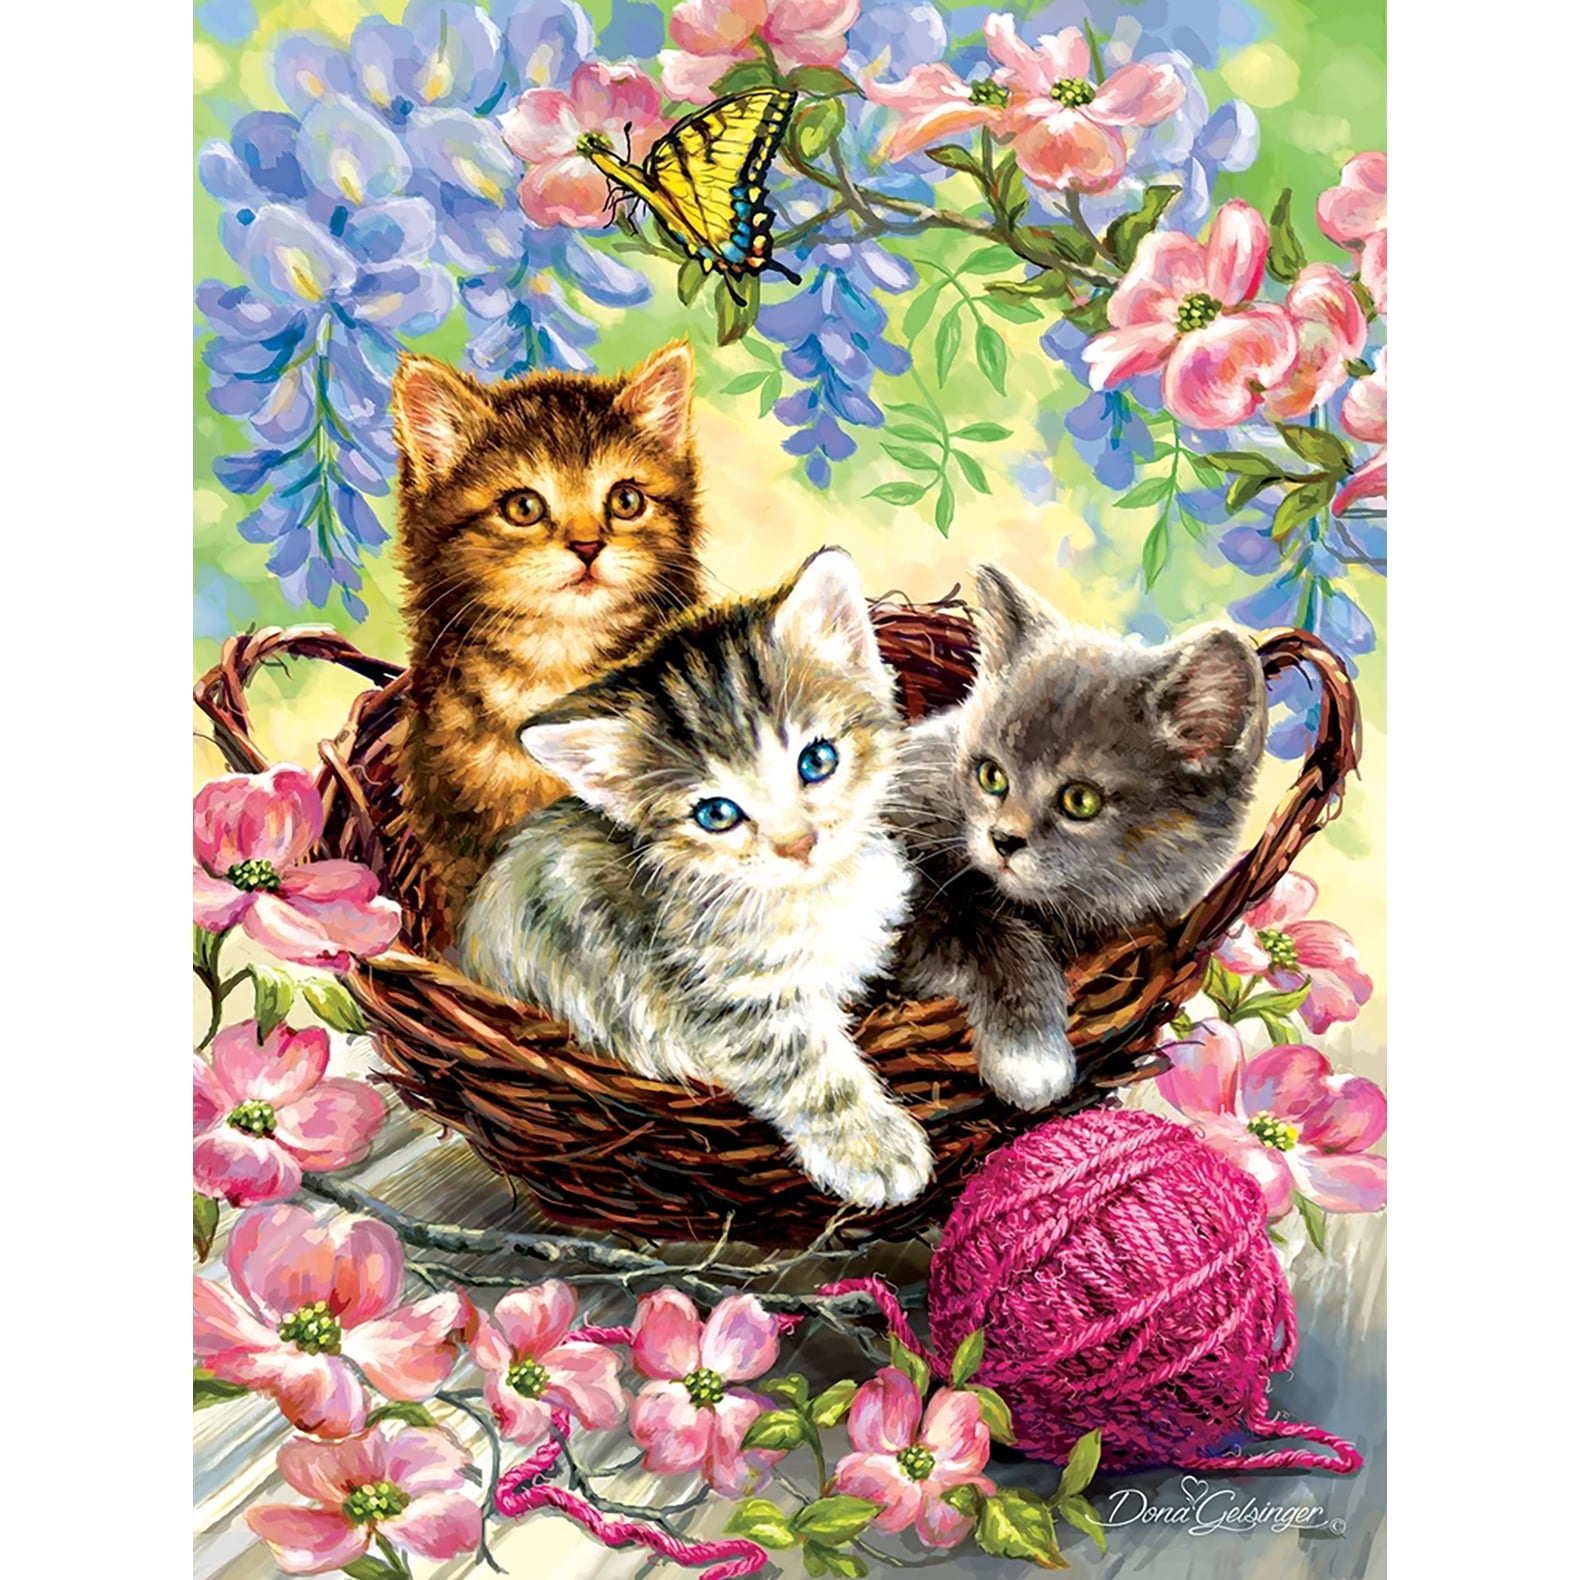 5D DIY Painting Cat Animal Home Decor Art Cross Stitch Kit Diamond Embroidery